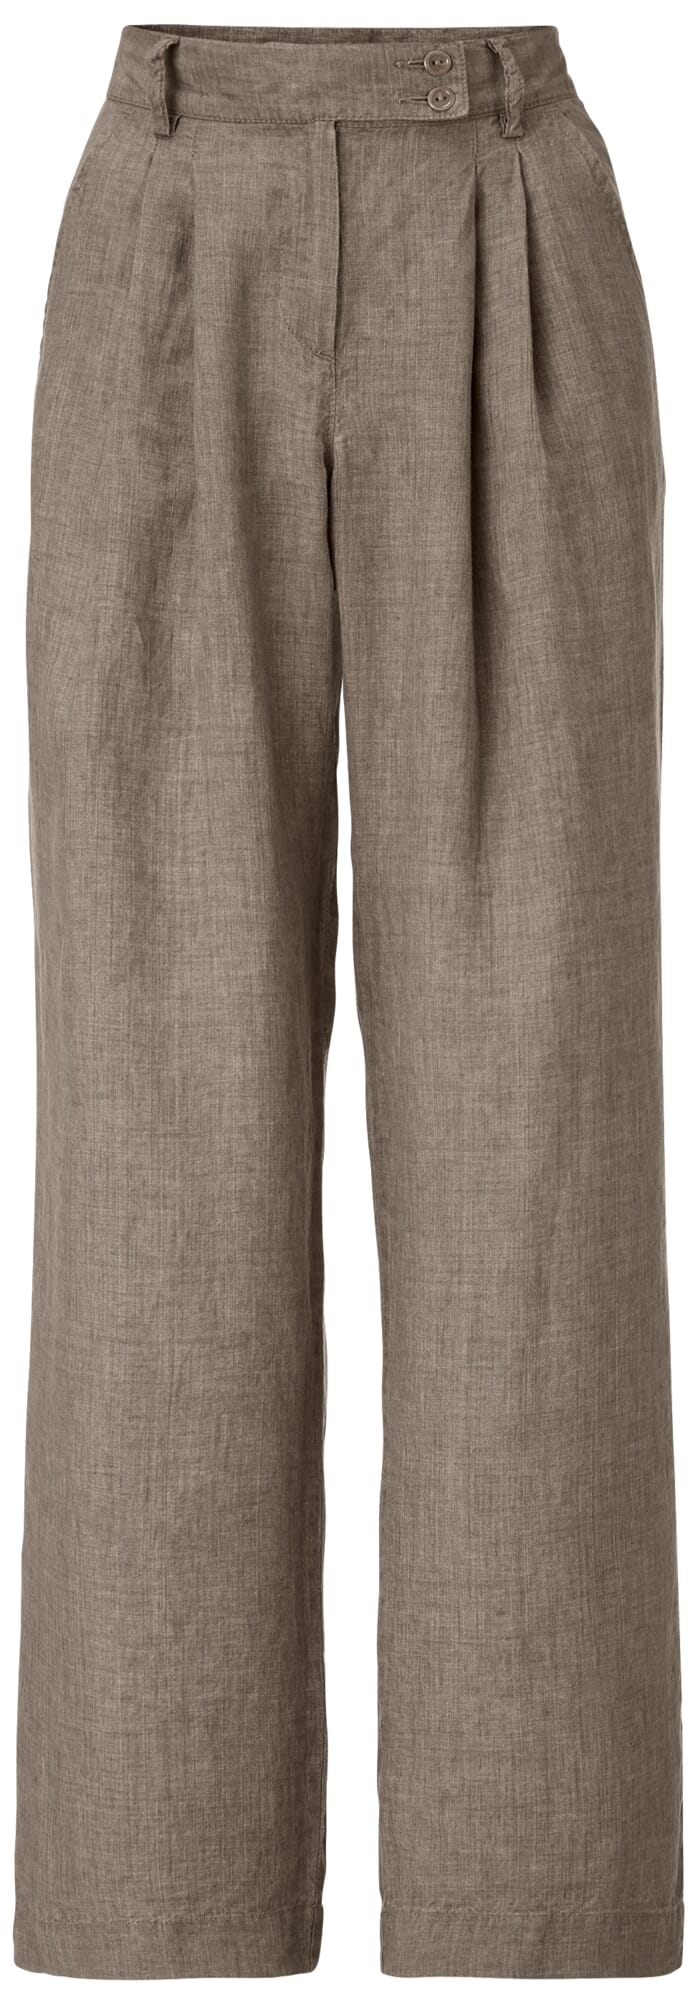 Ladies Wide Leg Trousers Harem Pleated Crinkle Flared Pants Palazzo Plain  Baggy | eBay